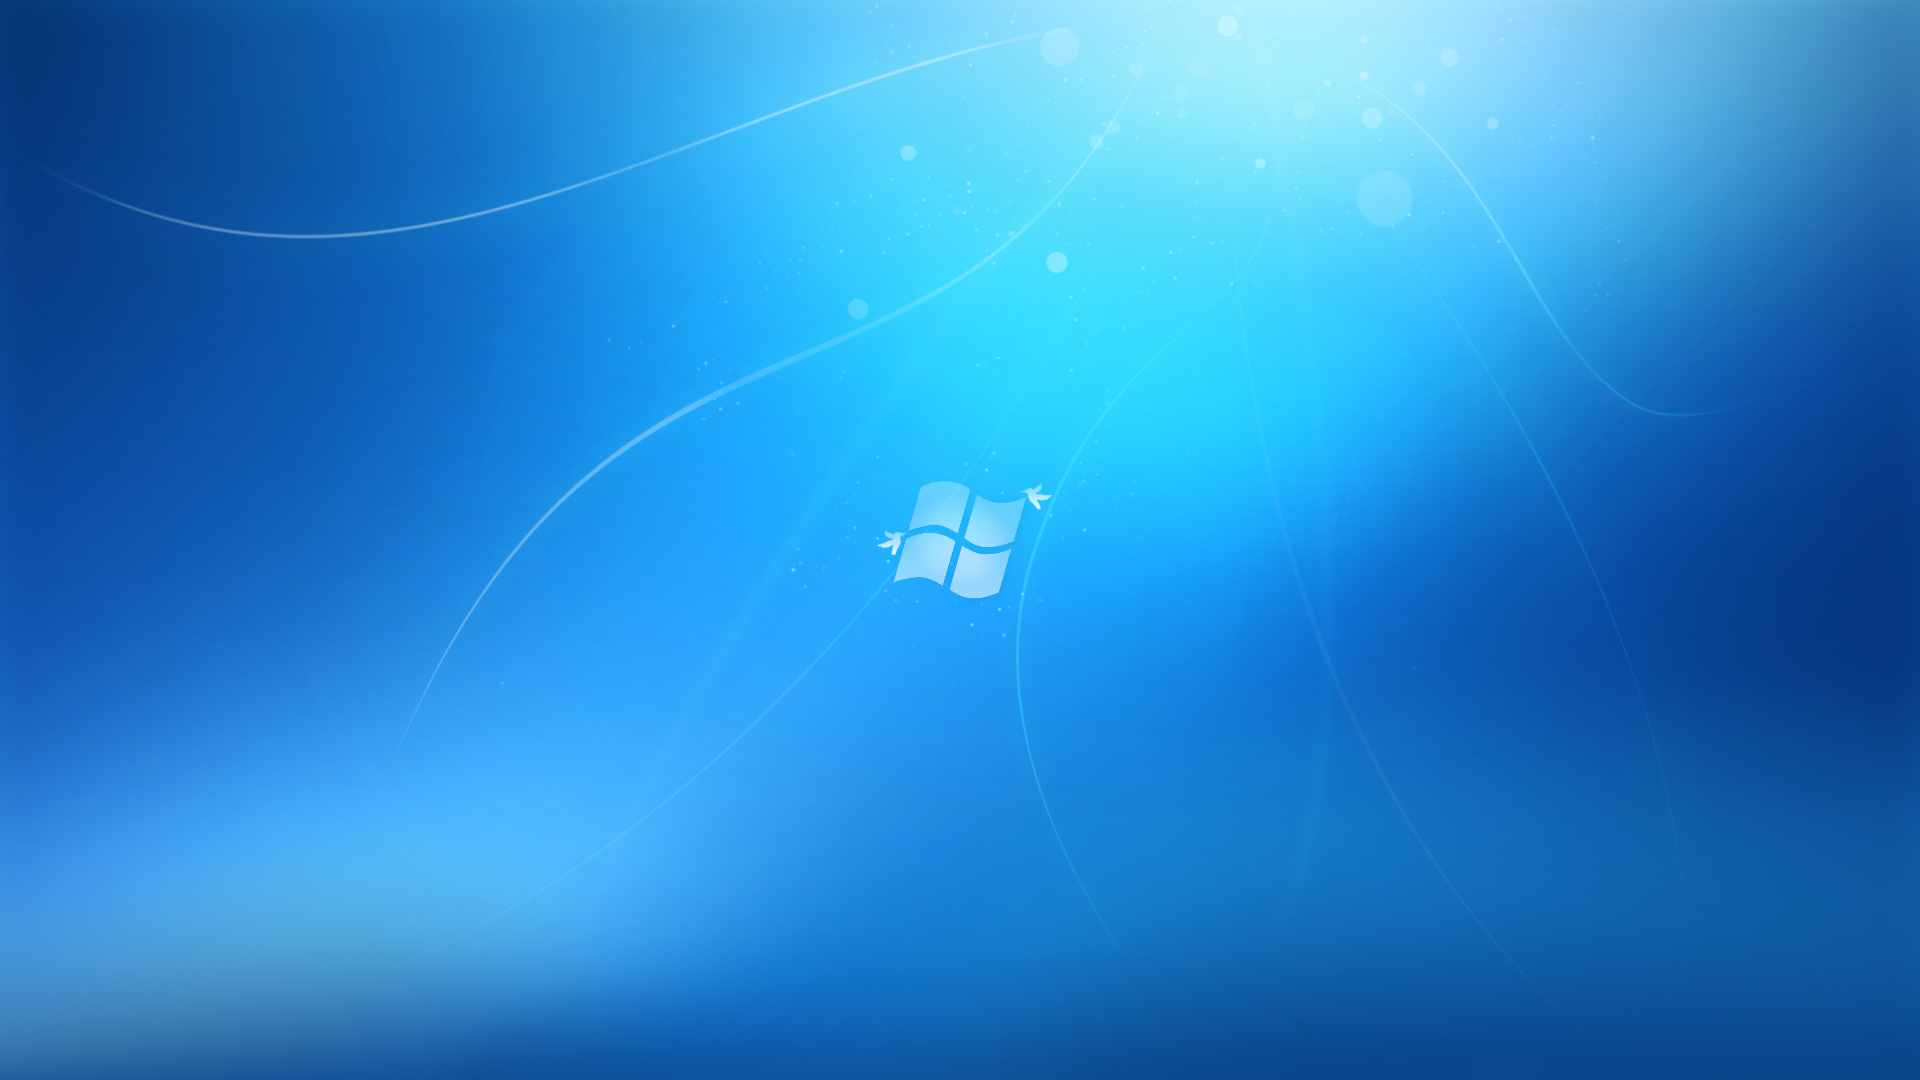 Cool Windows Backgrounds For Desktop 1920x1080